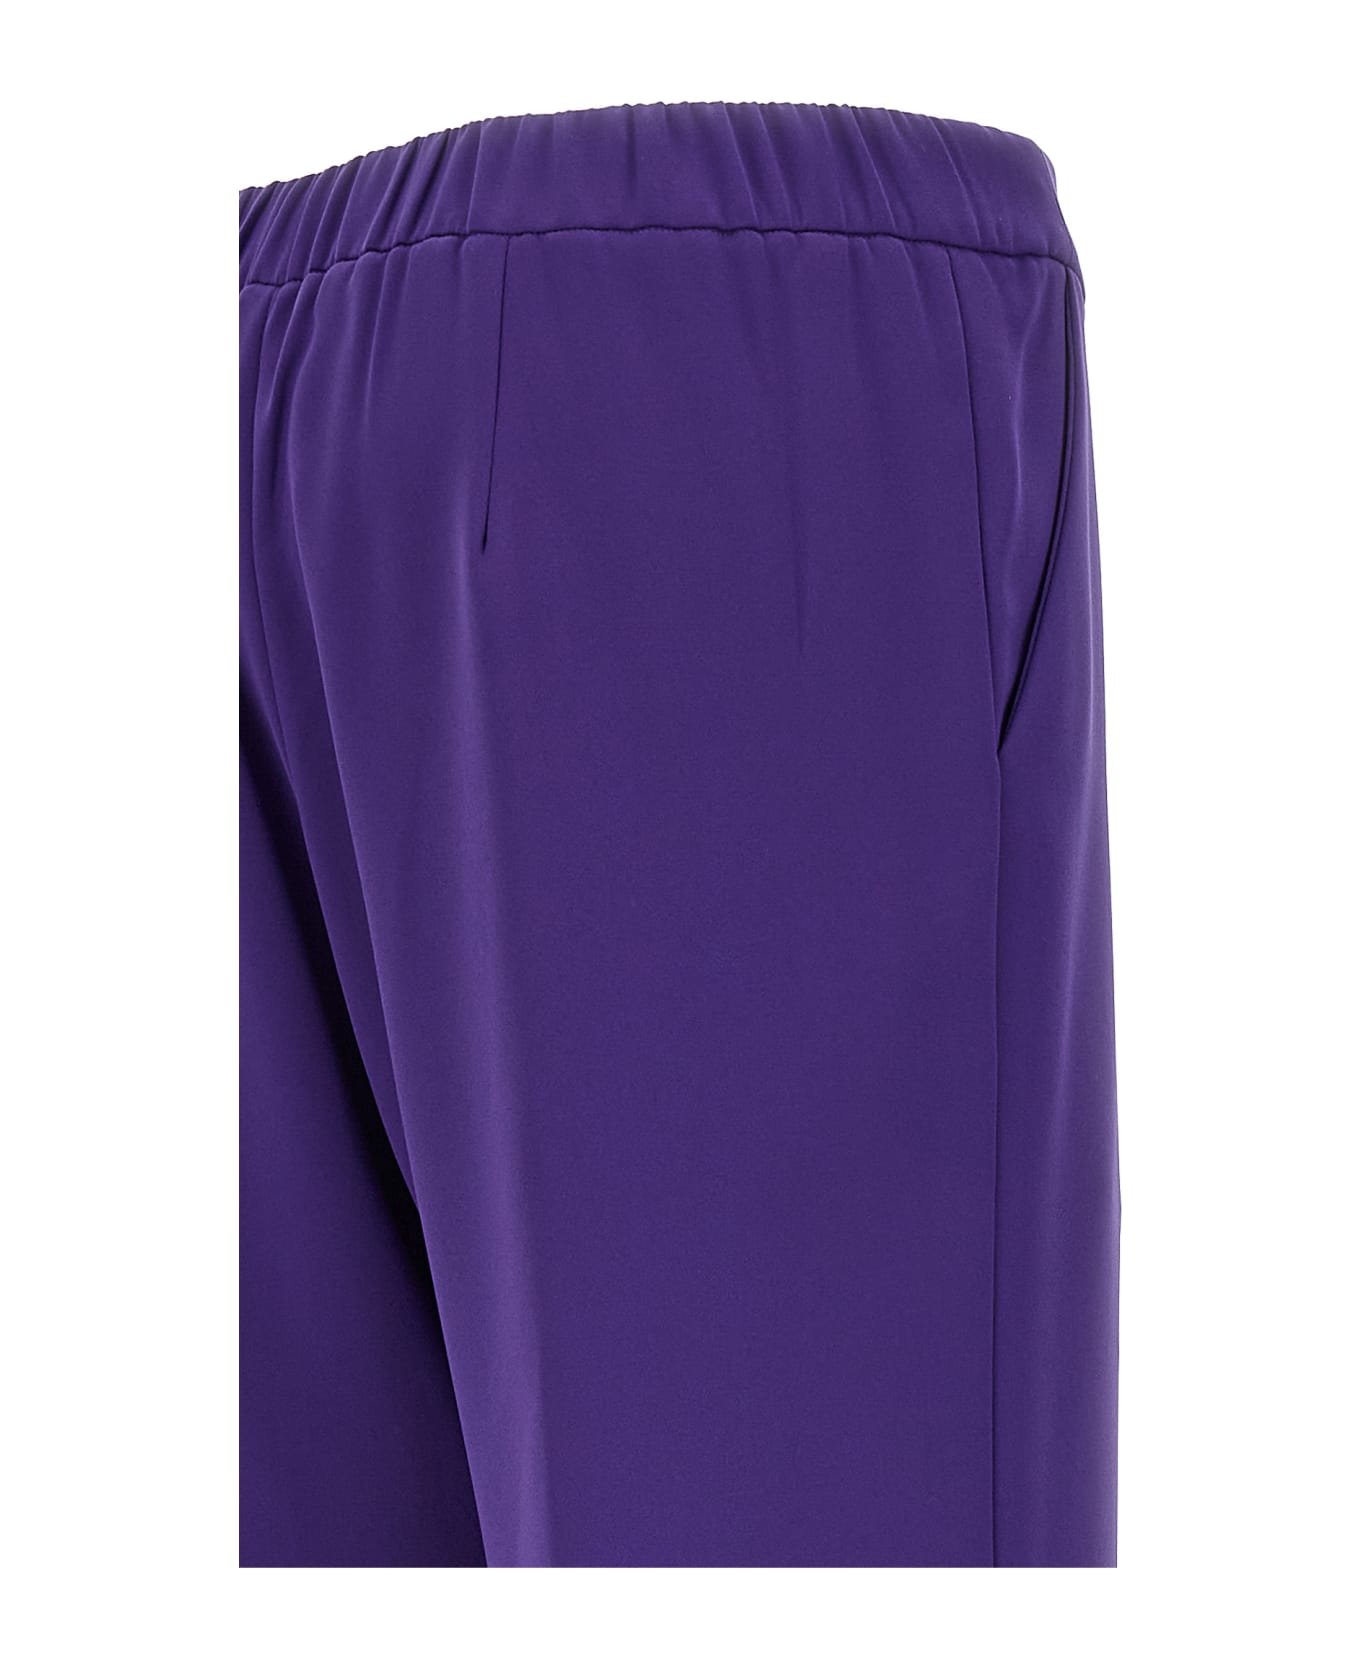 Parosh Cady Pants - Purple